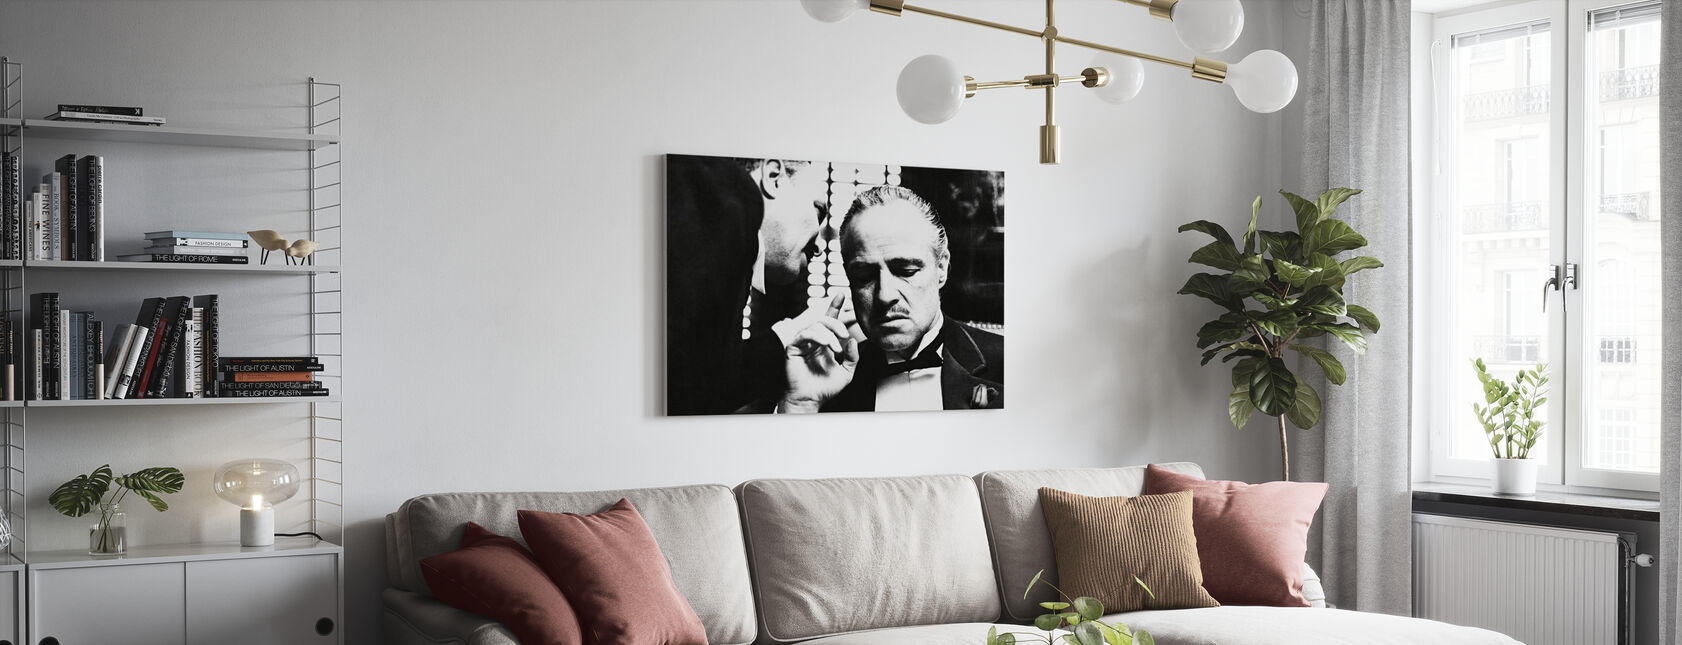 Marlon Brando i Gudfaren - Lerretsbilde - Stue